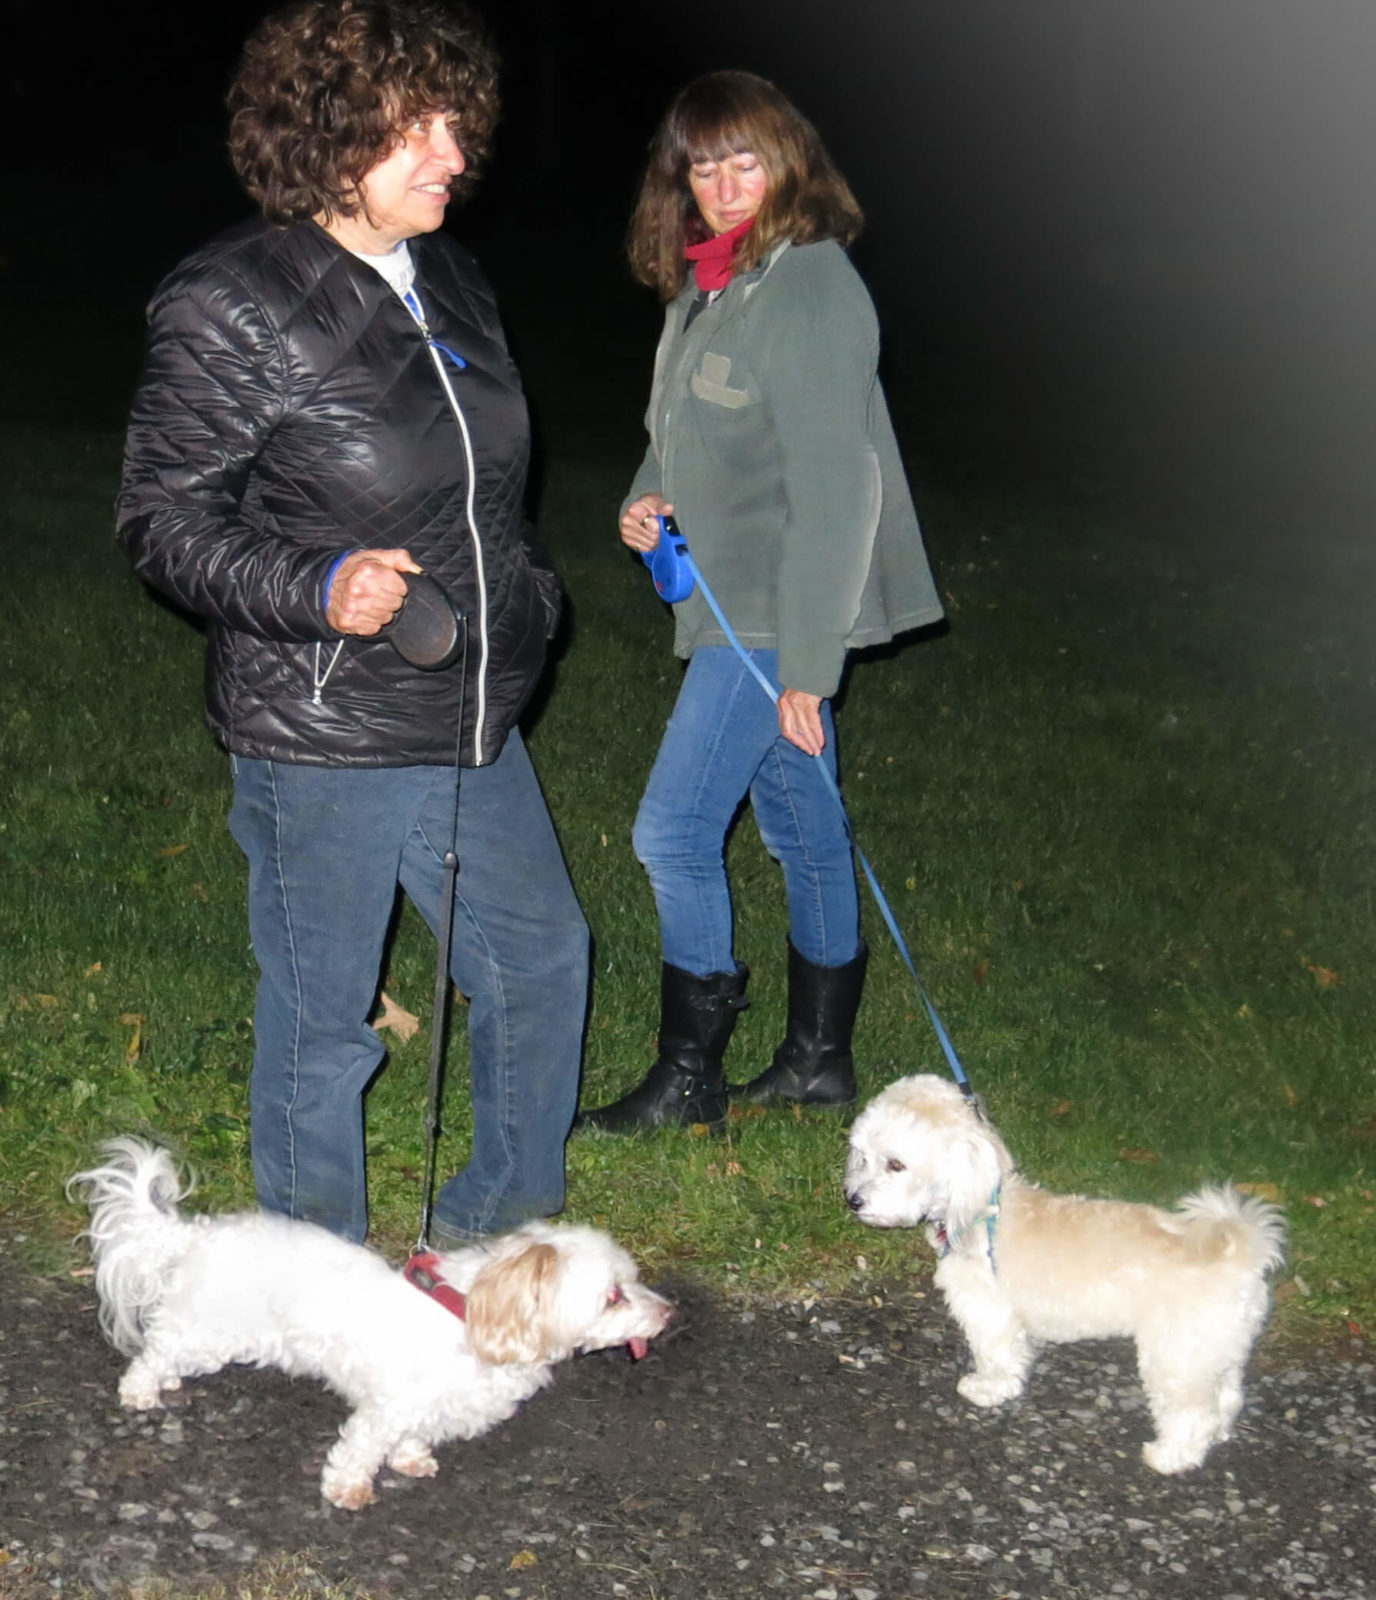 Robin Botie of Ithaca, New York, walking the dog at night.